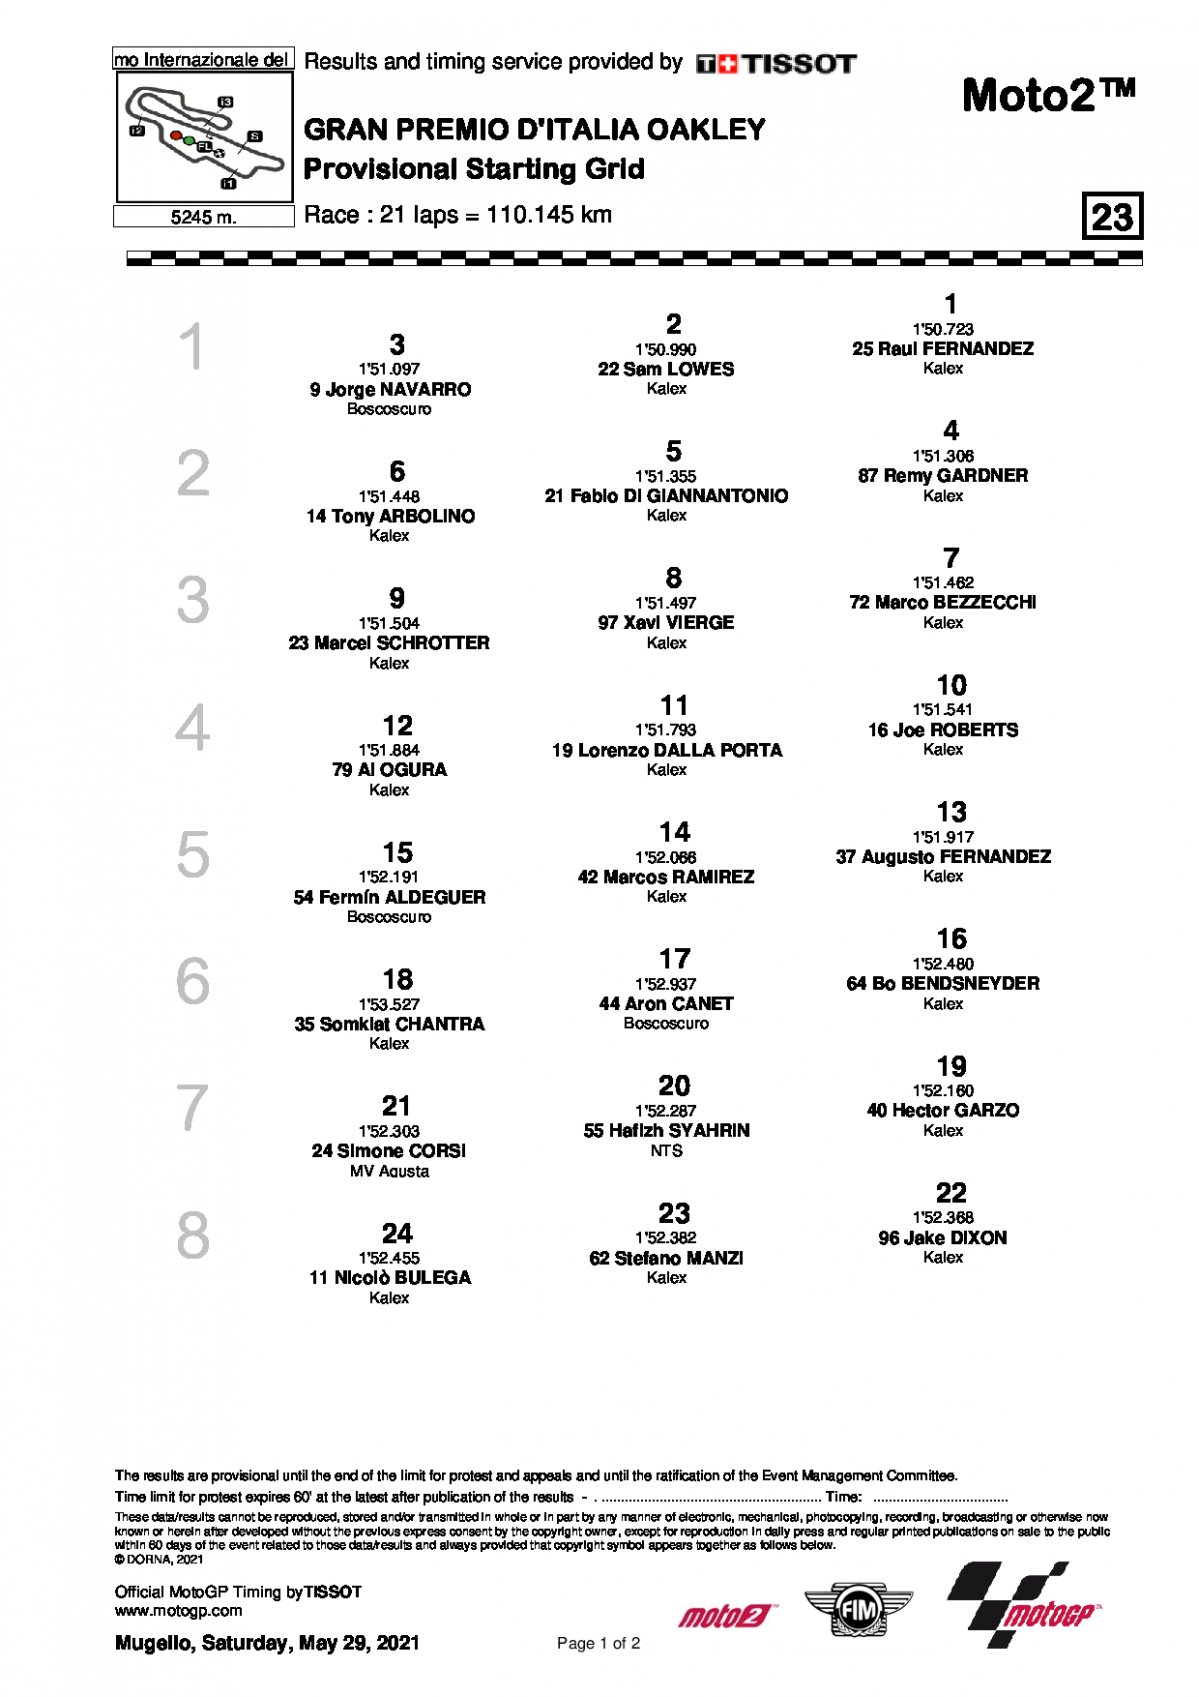 Стартовая решетка Гран-При Италии, Moto2 (30/05/2021)